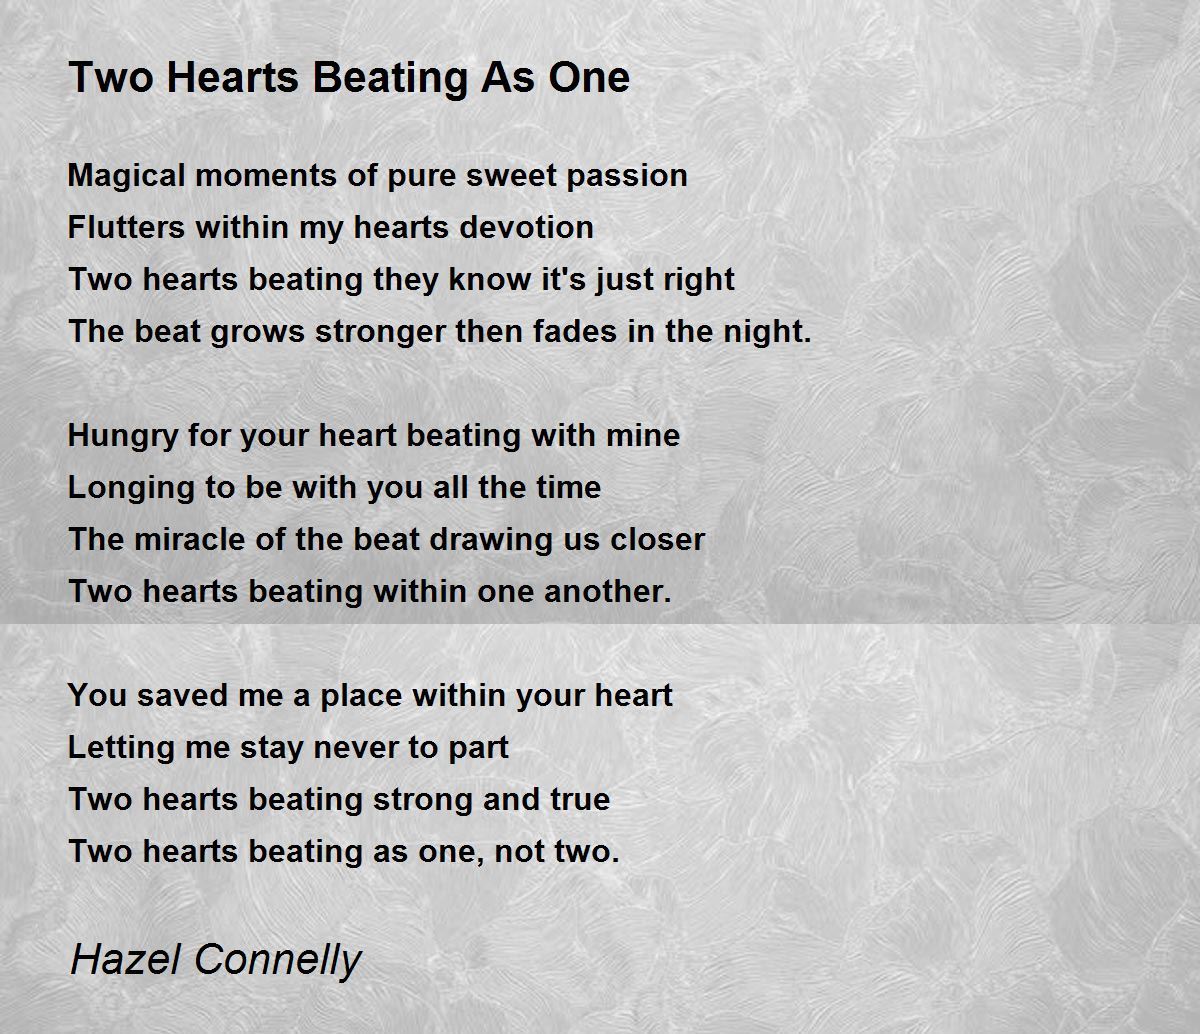 Opførsel tjene Indgang Two Hearts Beating As One - Two Hearts Beating As One Poem by Hazel Connelly